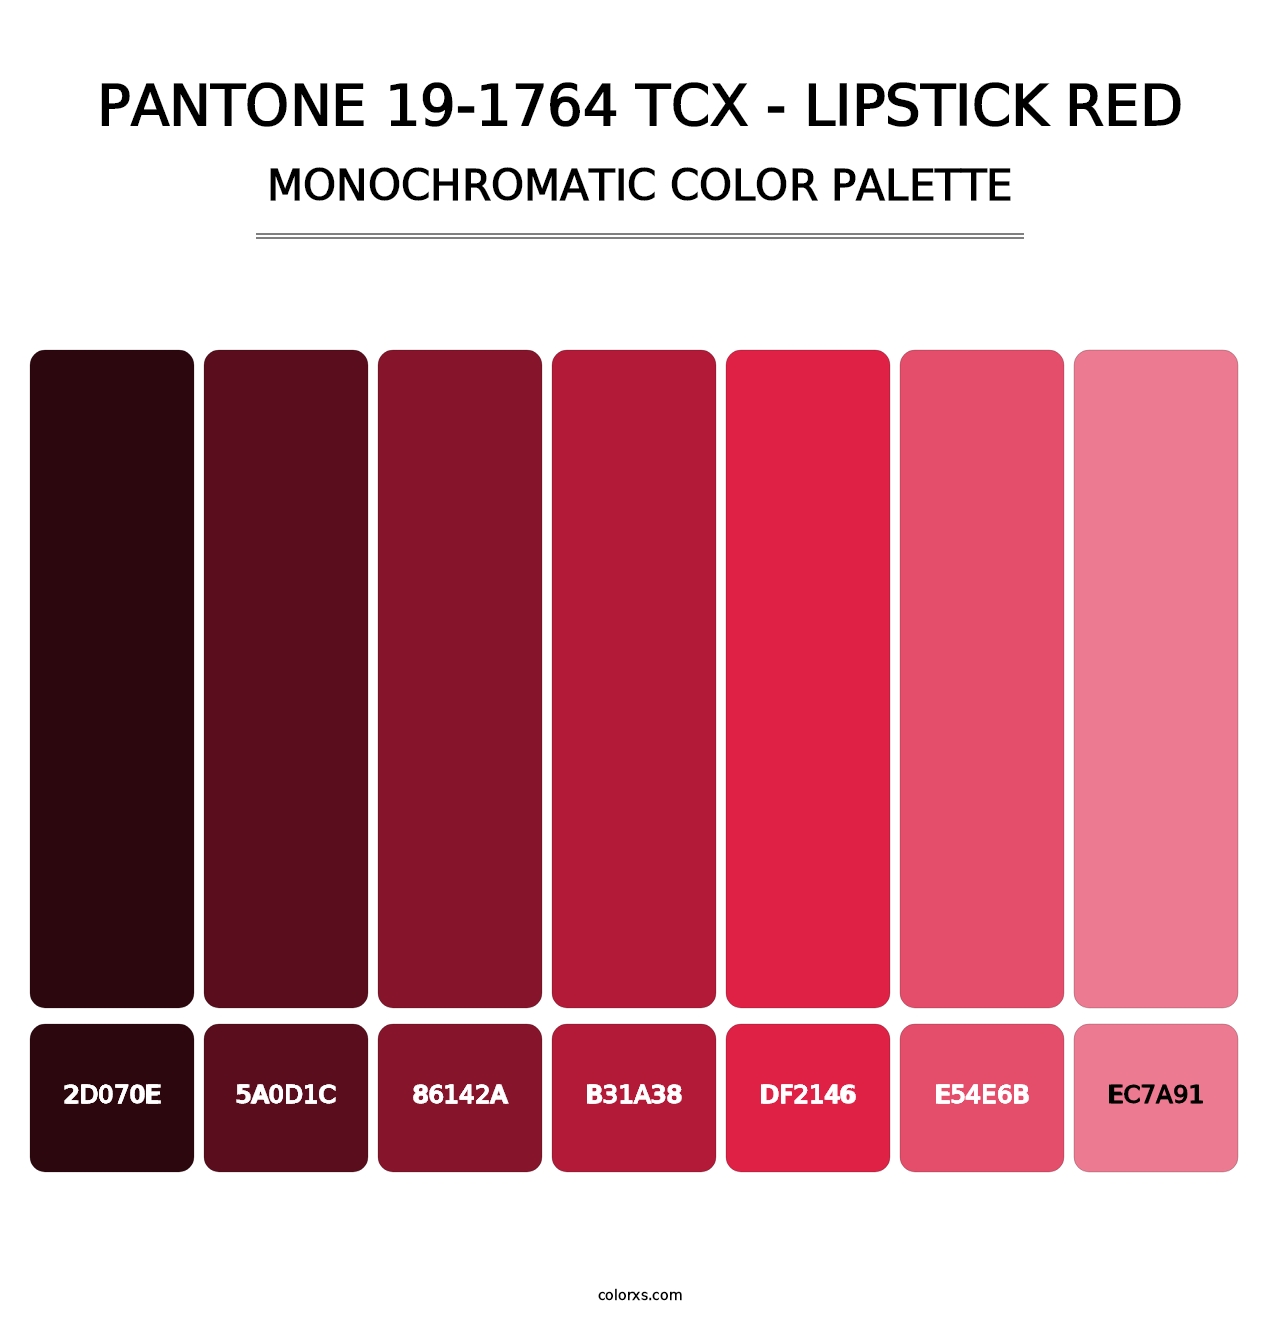 PANTONE 19-1764 TCX - Lipstick Red - Monochromatic Color Palette